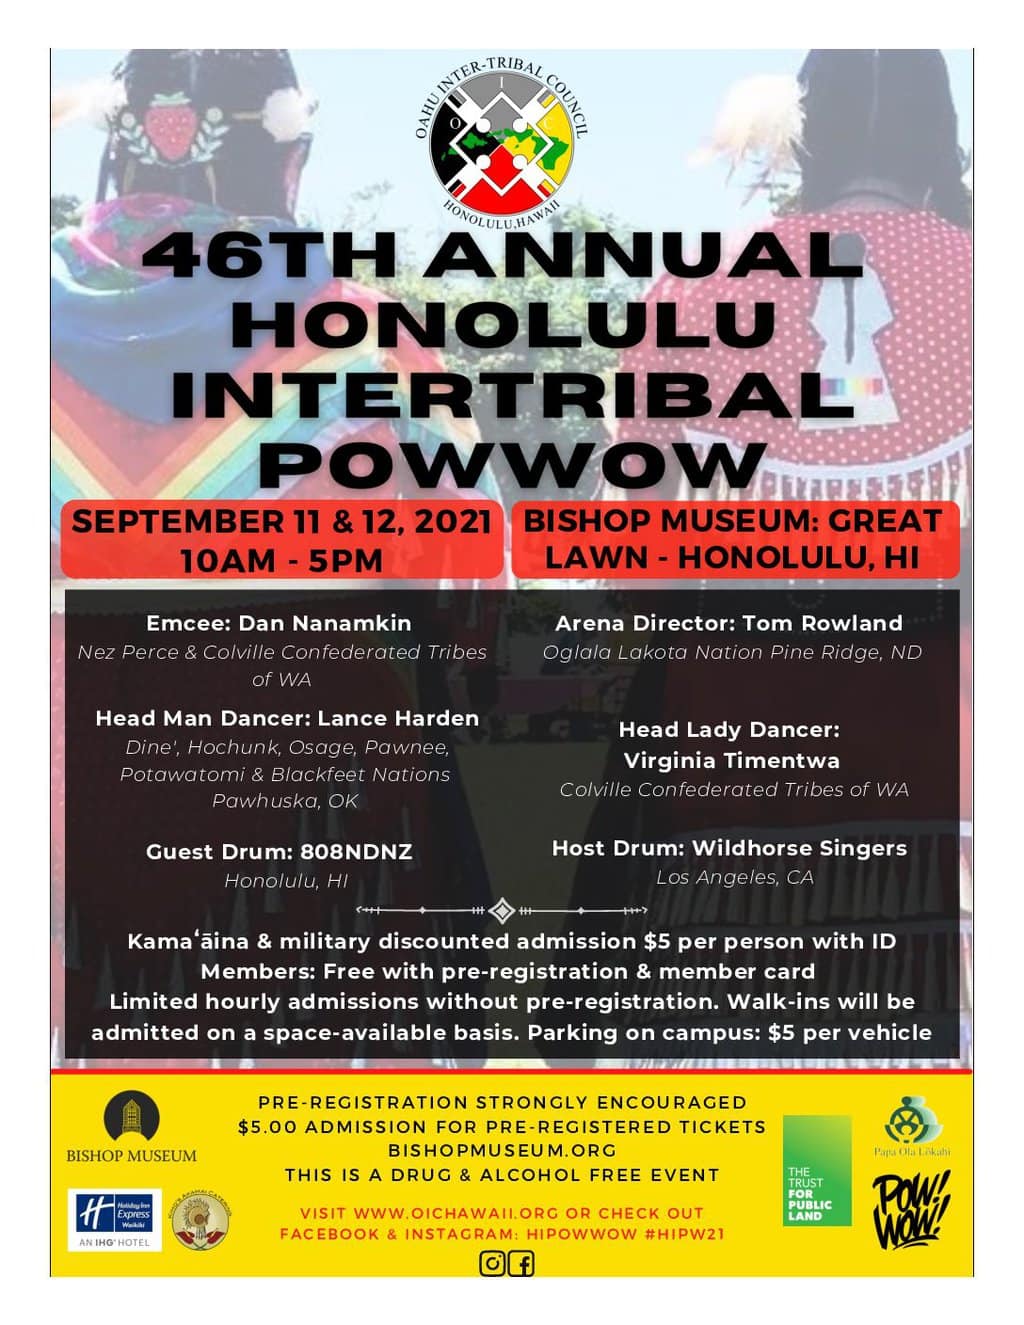 46th Annual Honolulu Intertribal Powwow 2021. **CANCELLED**